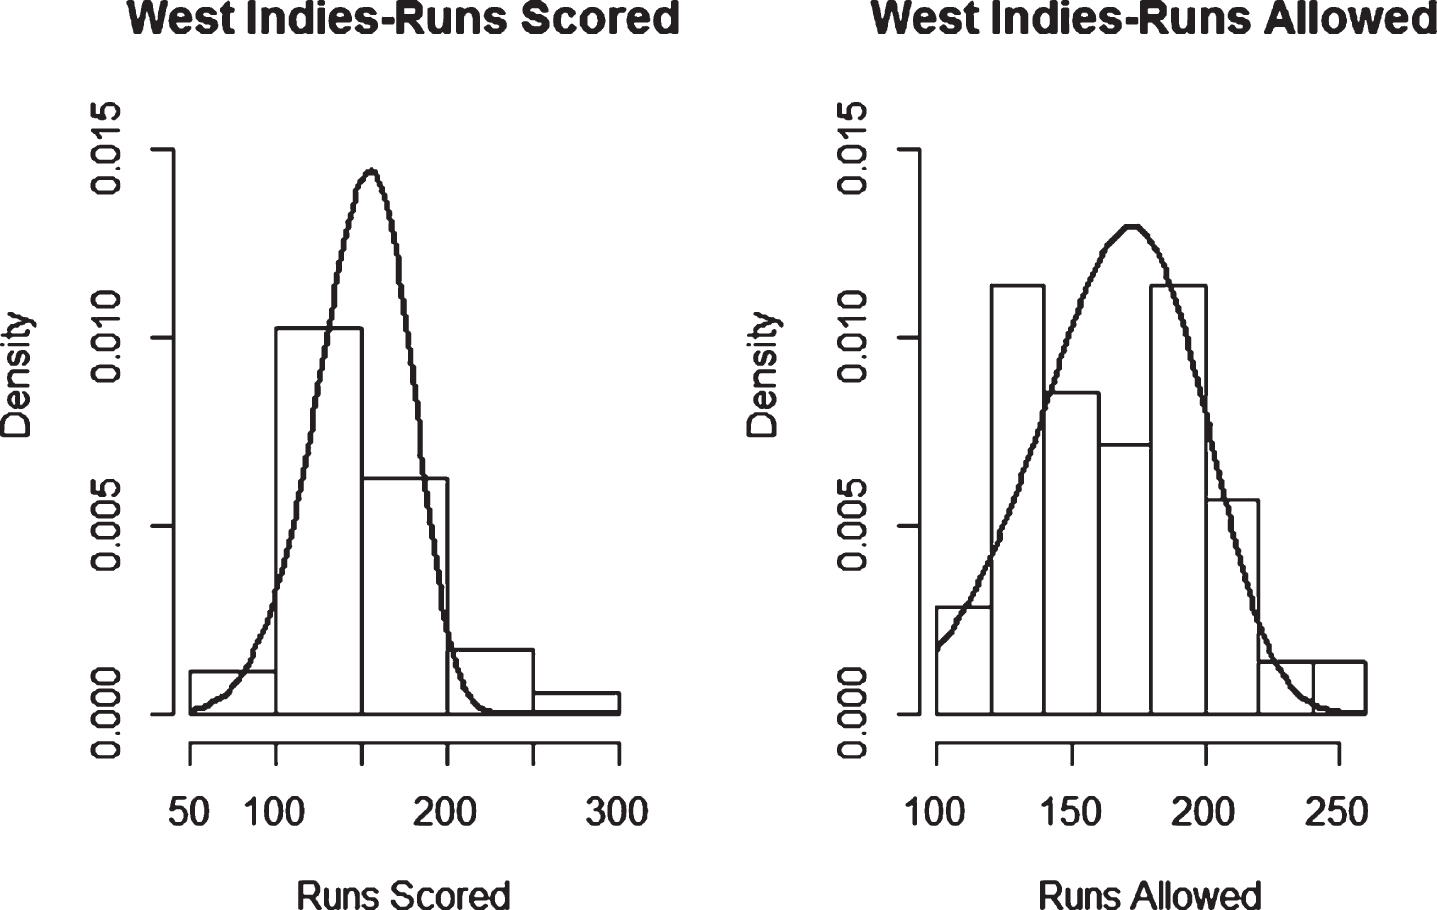 Weibull Distribution Fit for Runs Scored and Runs Allowed for West Indies using Maximum Likelihood Method (Twenty20).